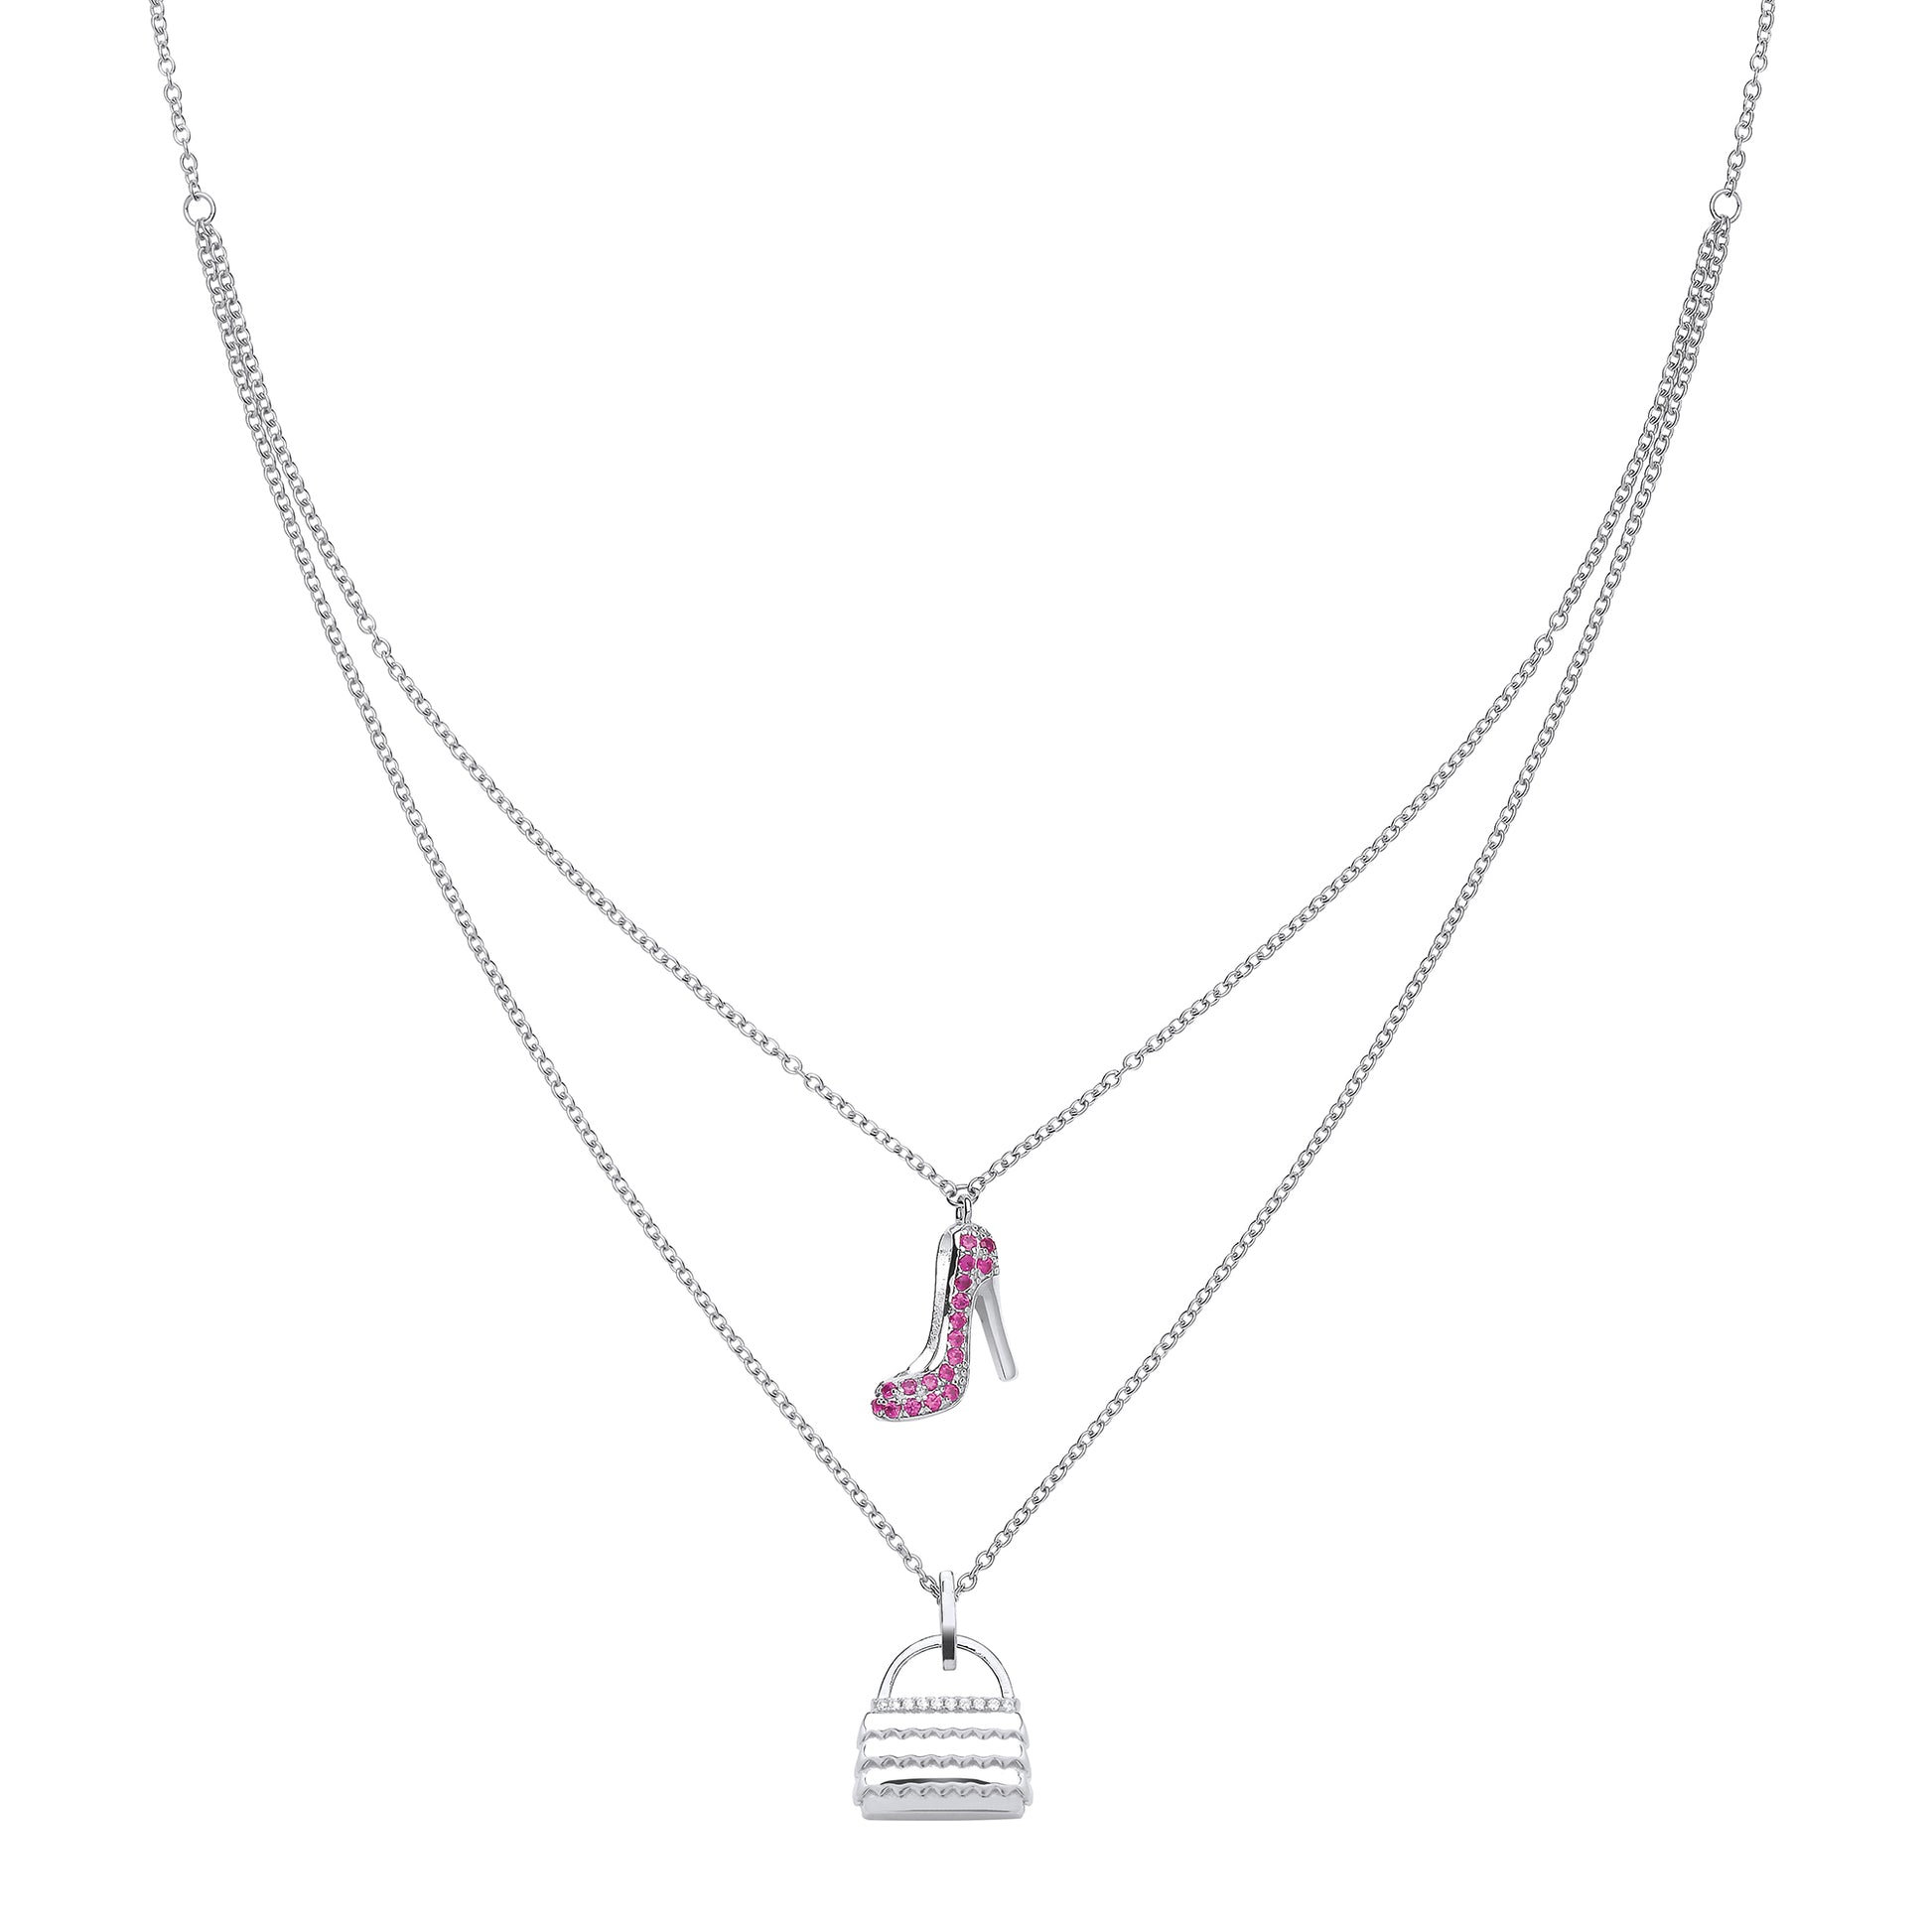 Silver  Pink CZ Clutch Handbag Stiletto Heel Charm Necklace 16" - GVK264